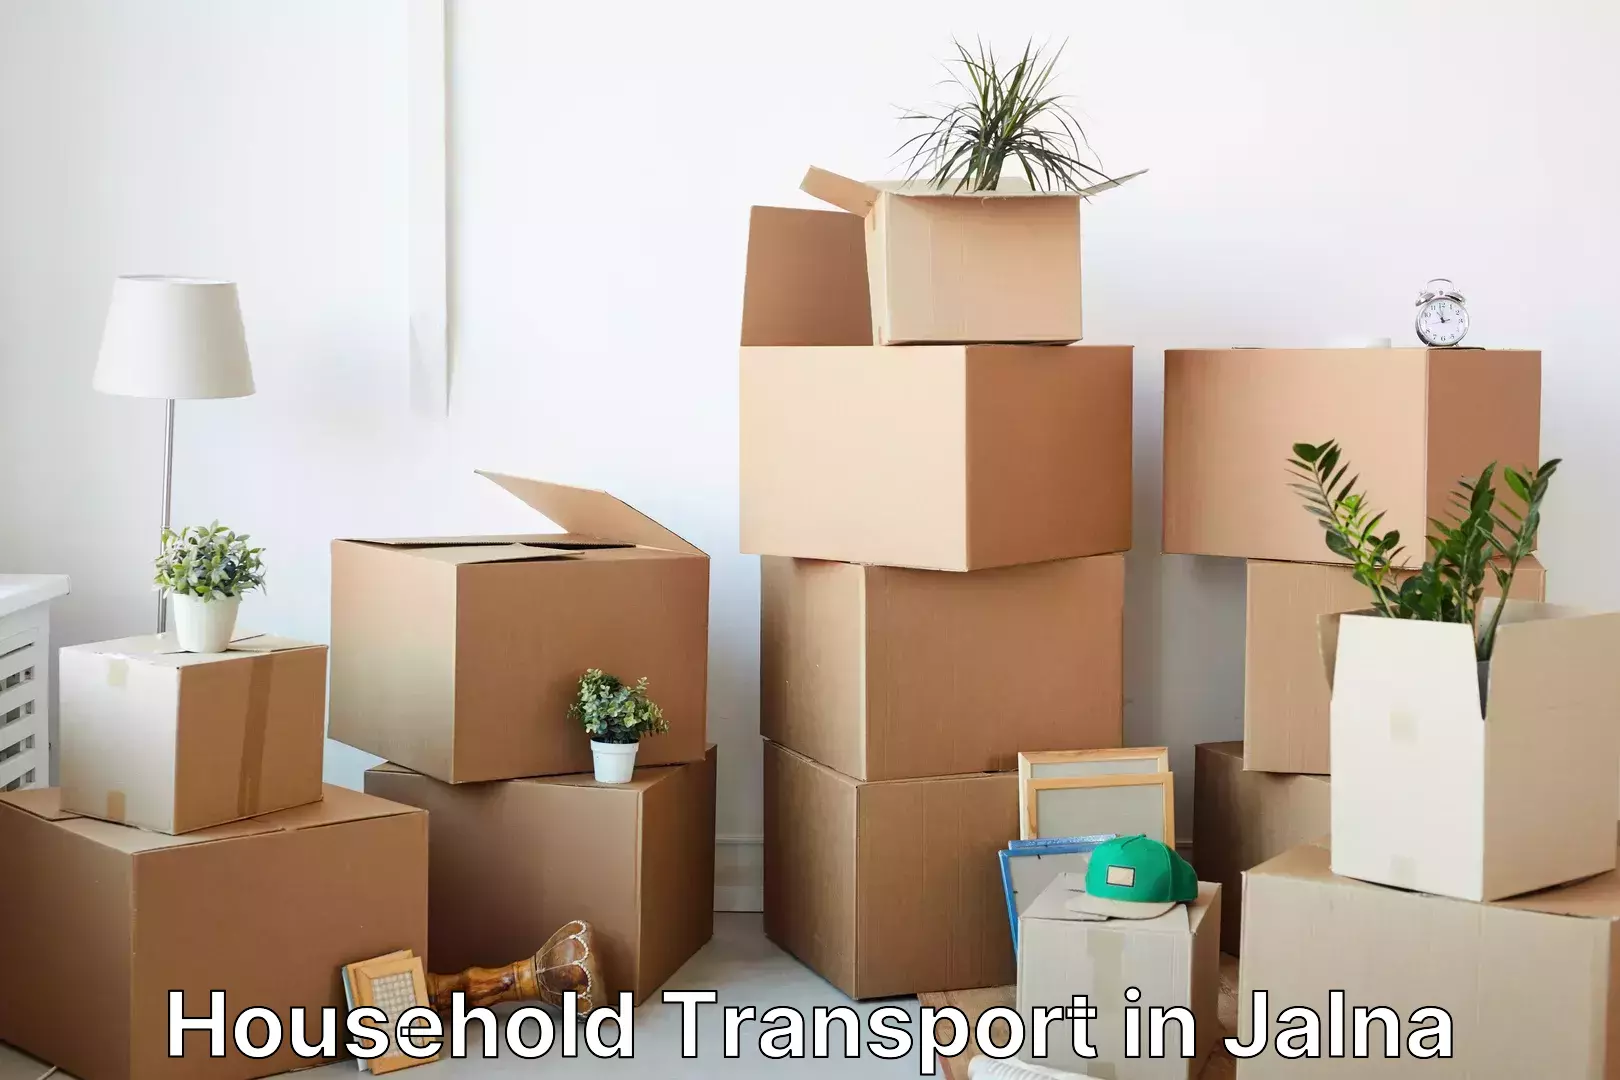 Furniture transport and storage in Jalna